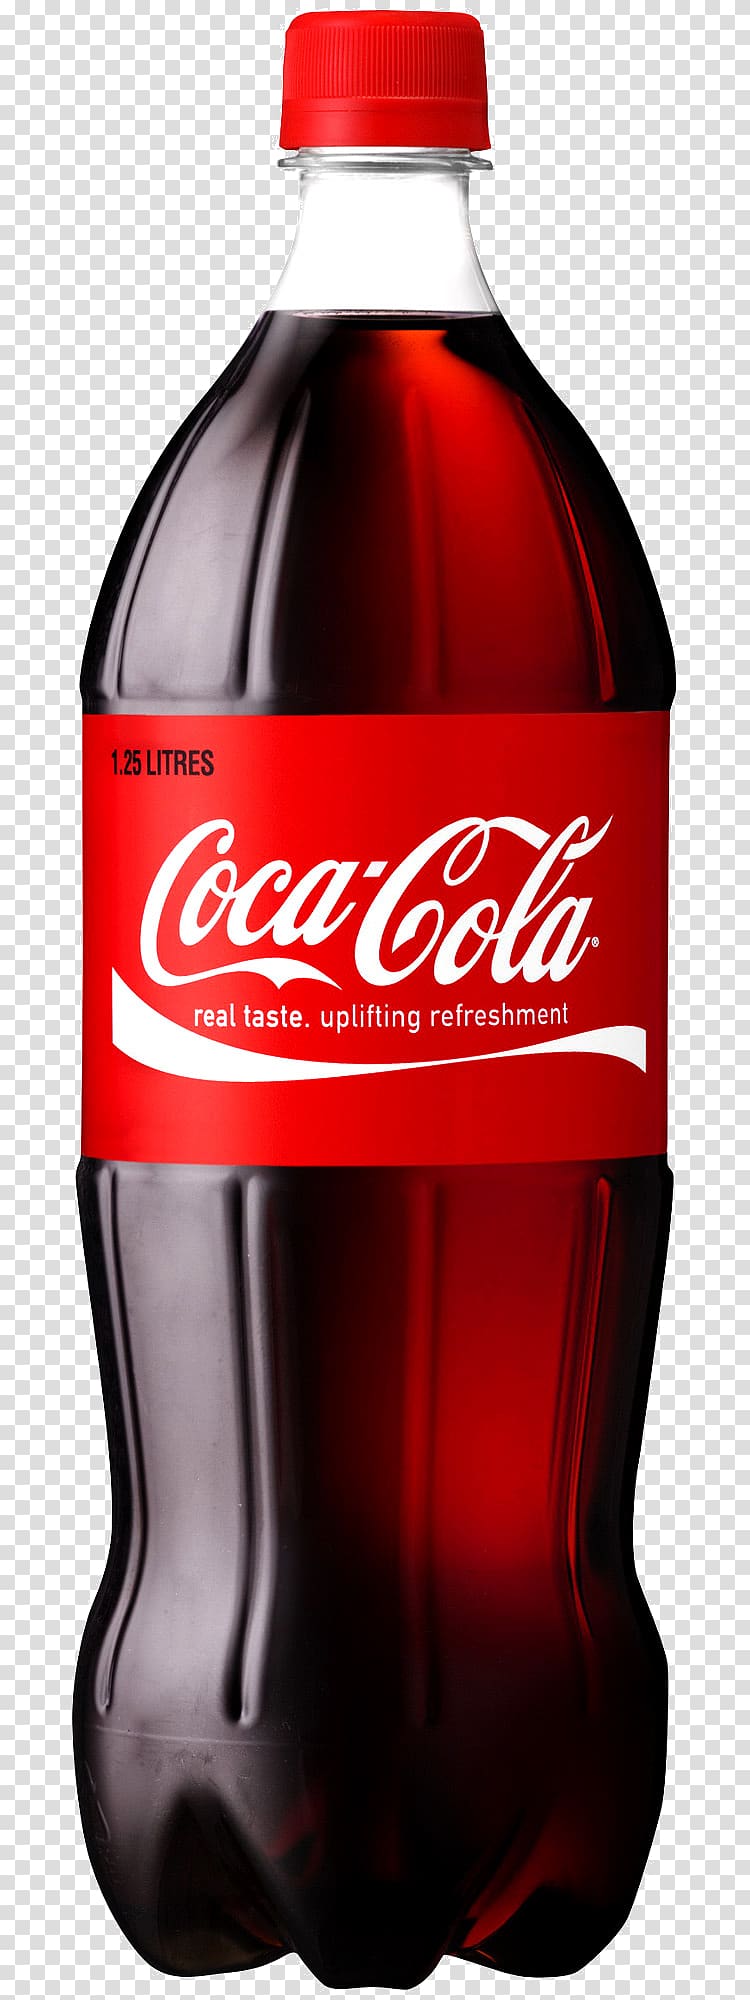 Coca-Cola soda plastic bottle, World of Coca-Cola Soft drink The Coca-Cola Company, Coca Cola bottle transparent background PNG clipart